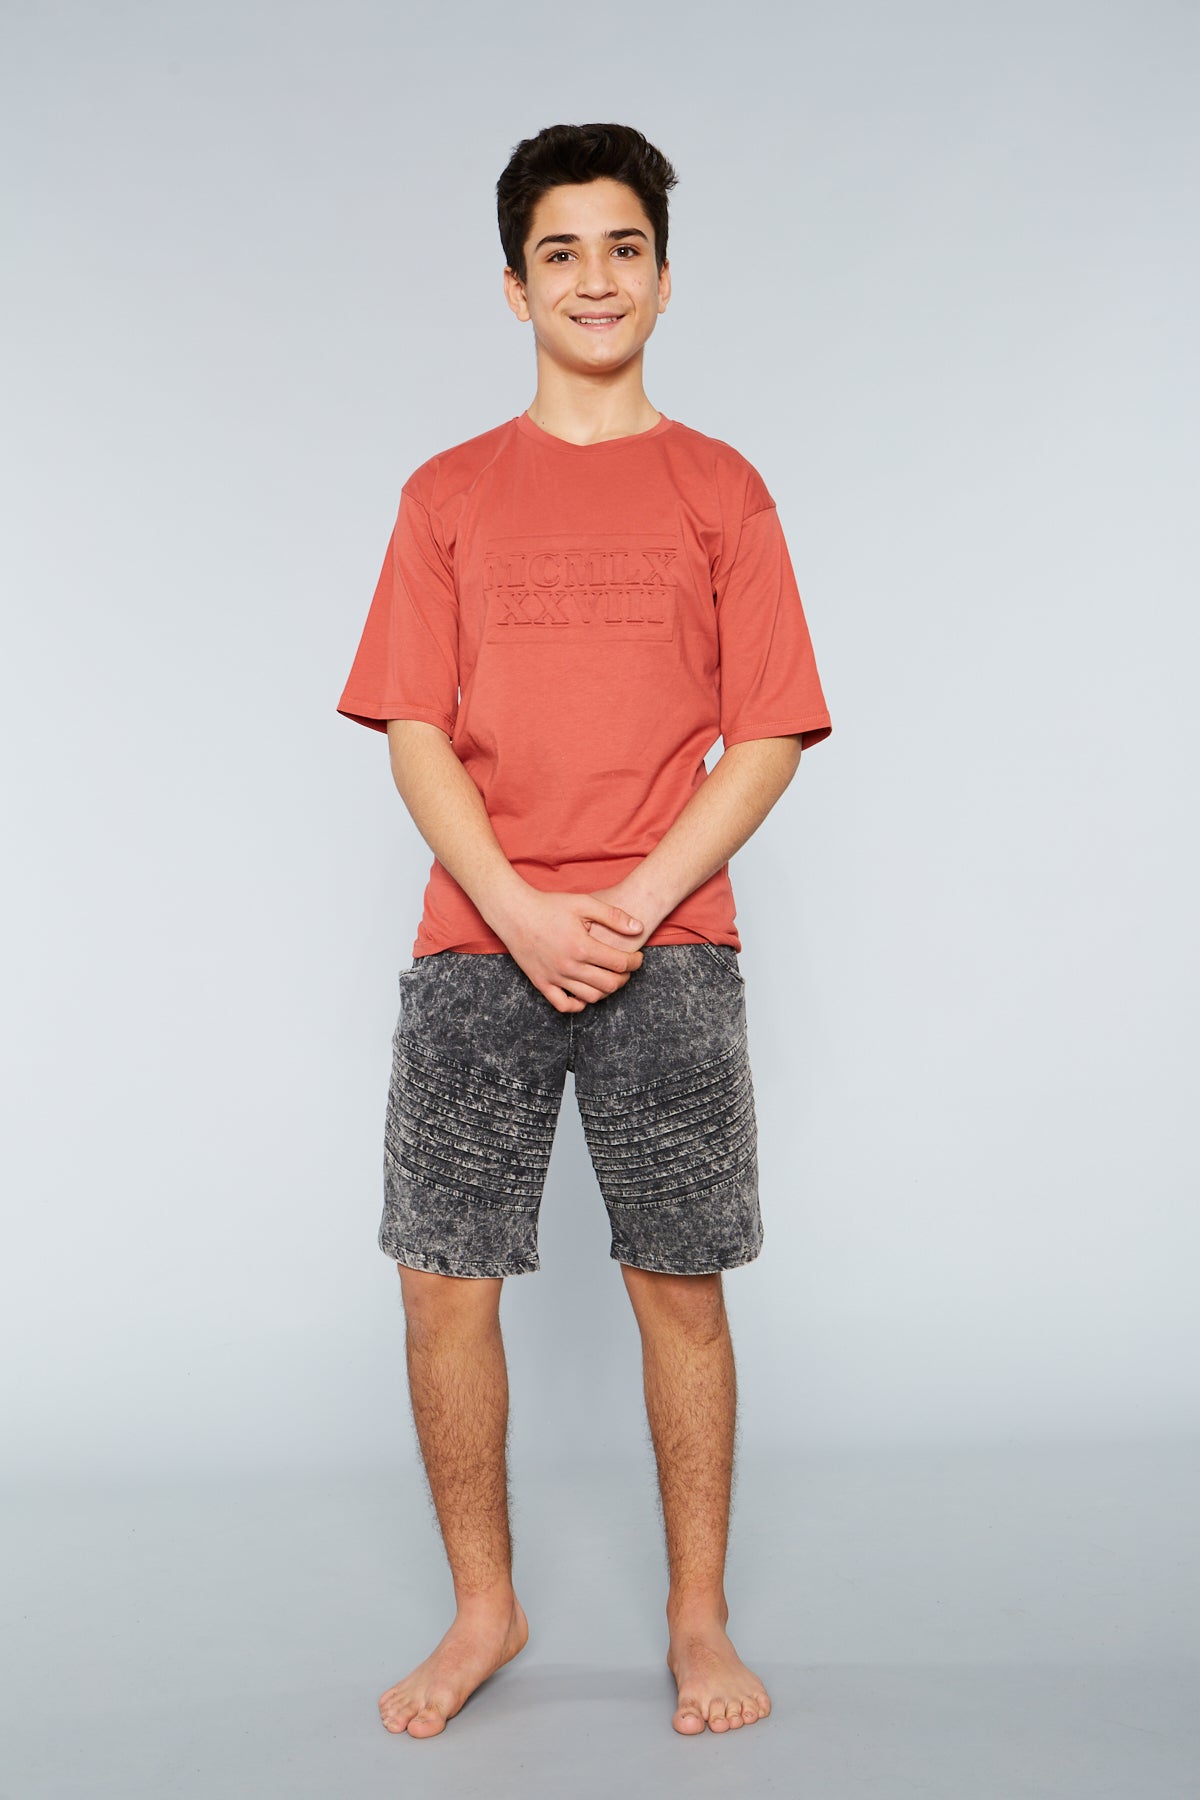 Kids unisex patterned shorts